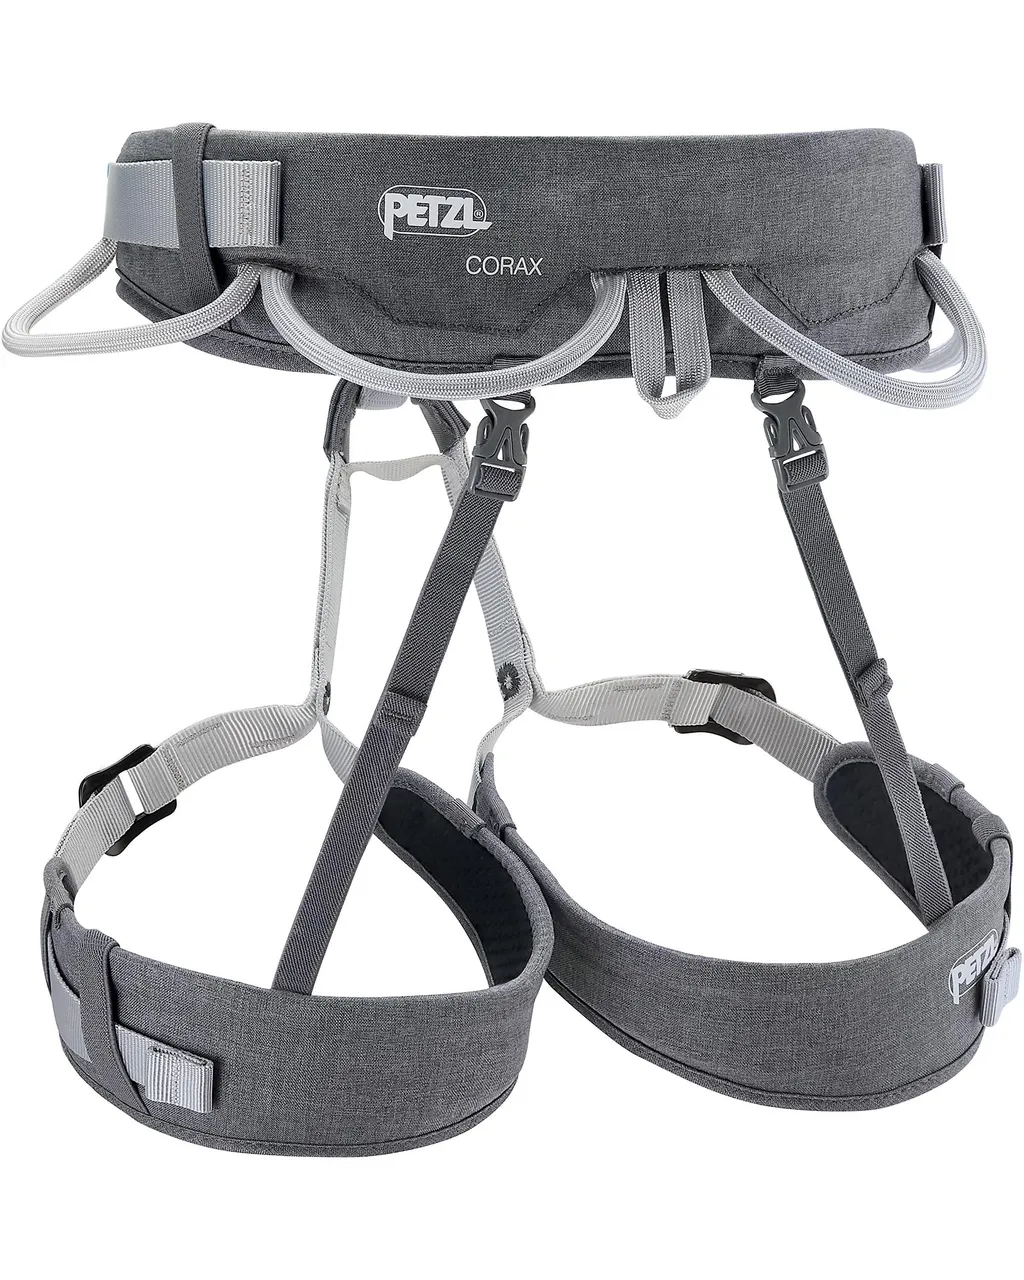 Petzl Corax Harness - Gray Size 2